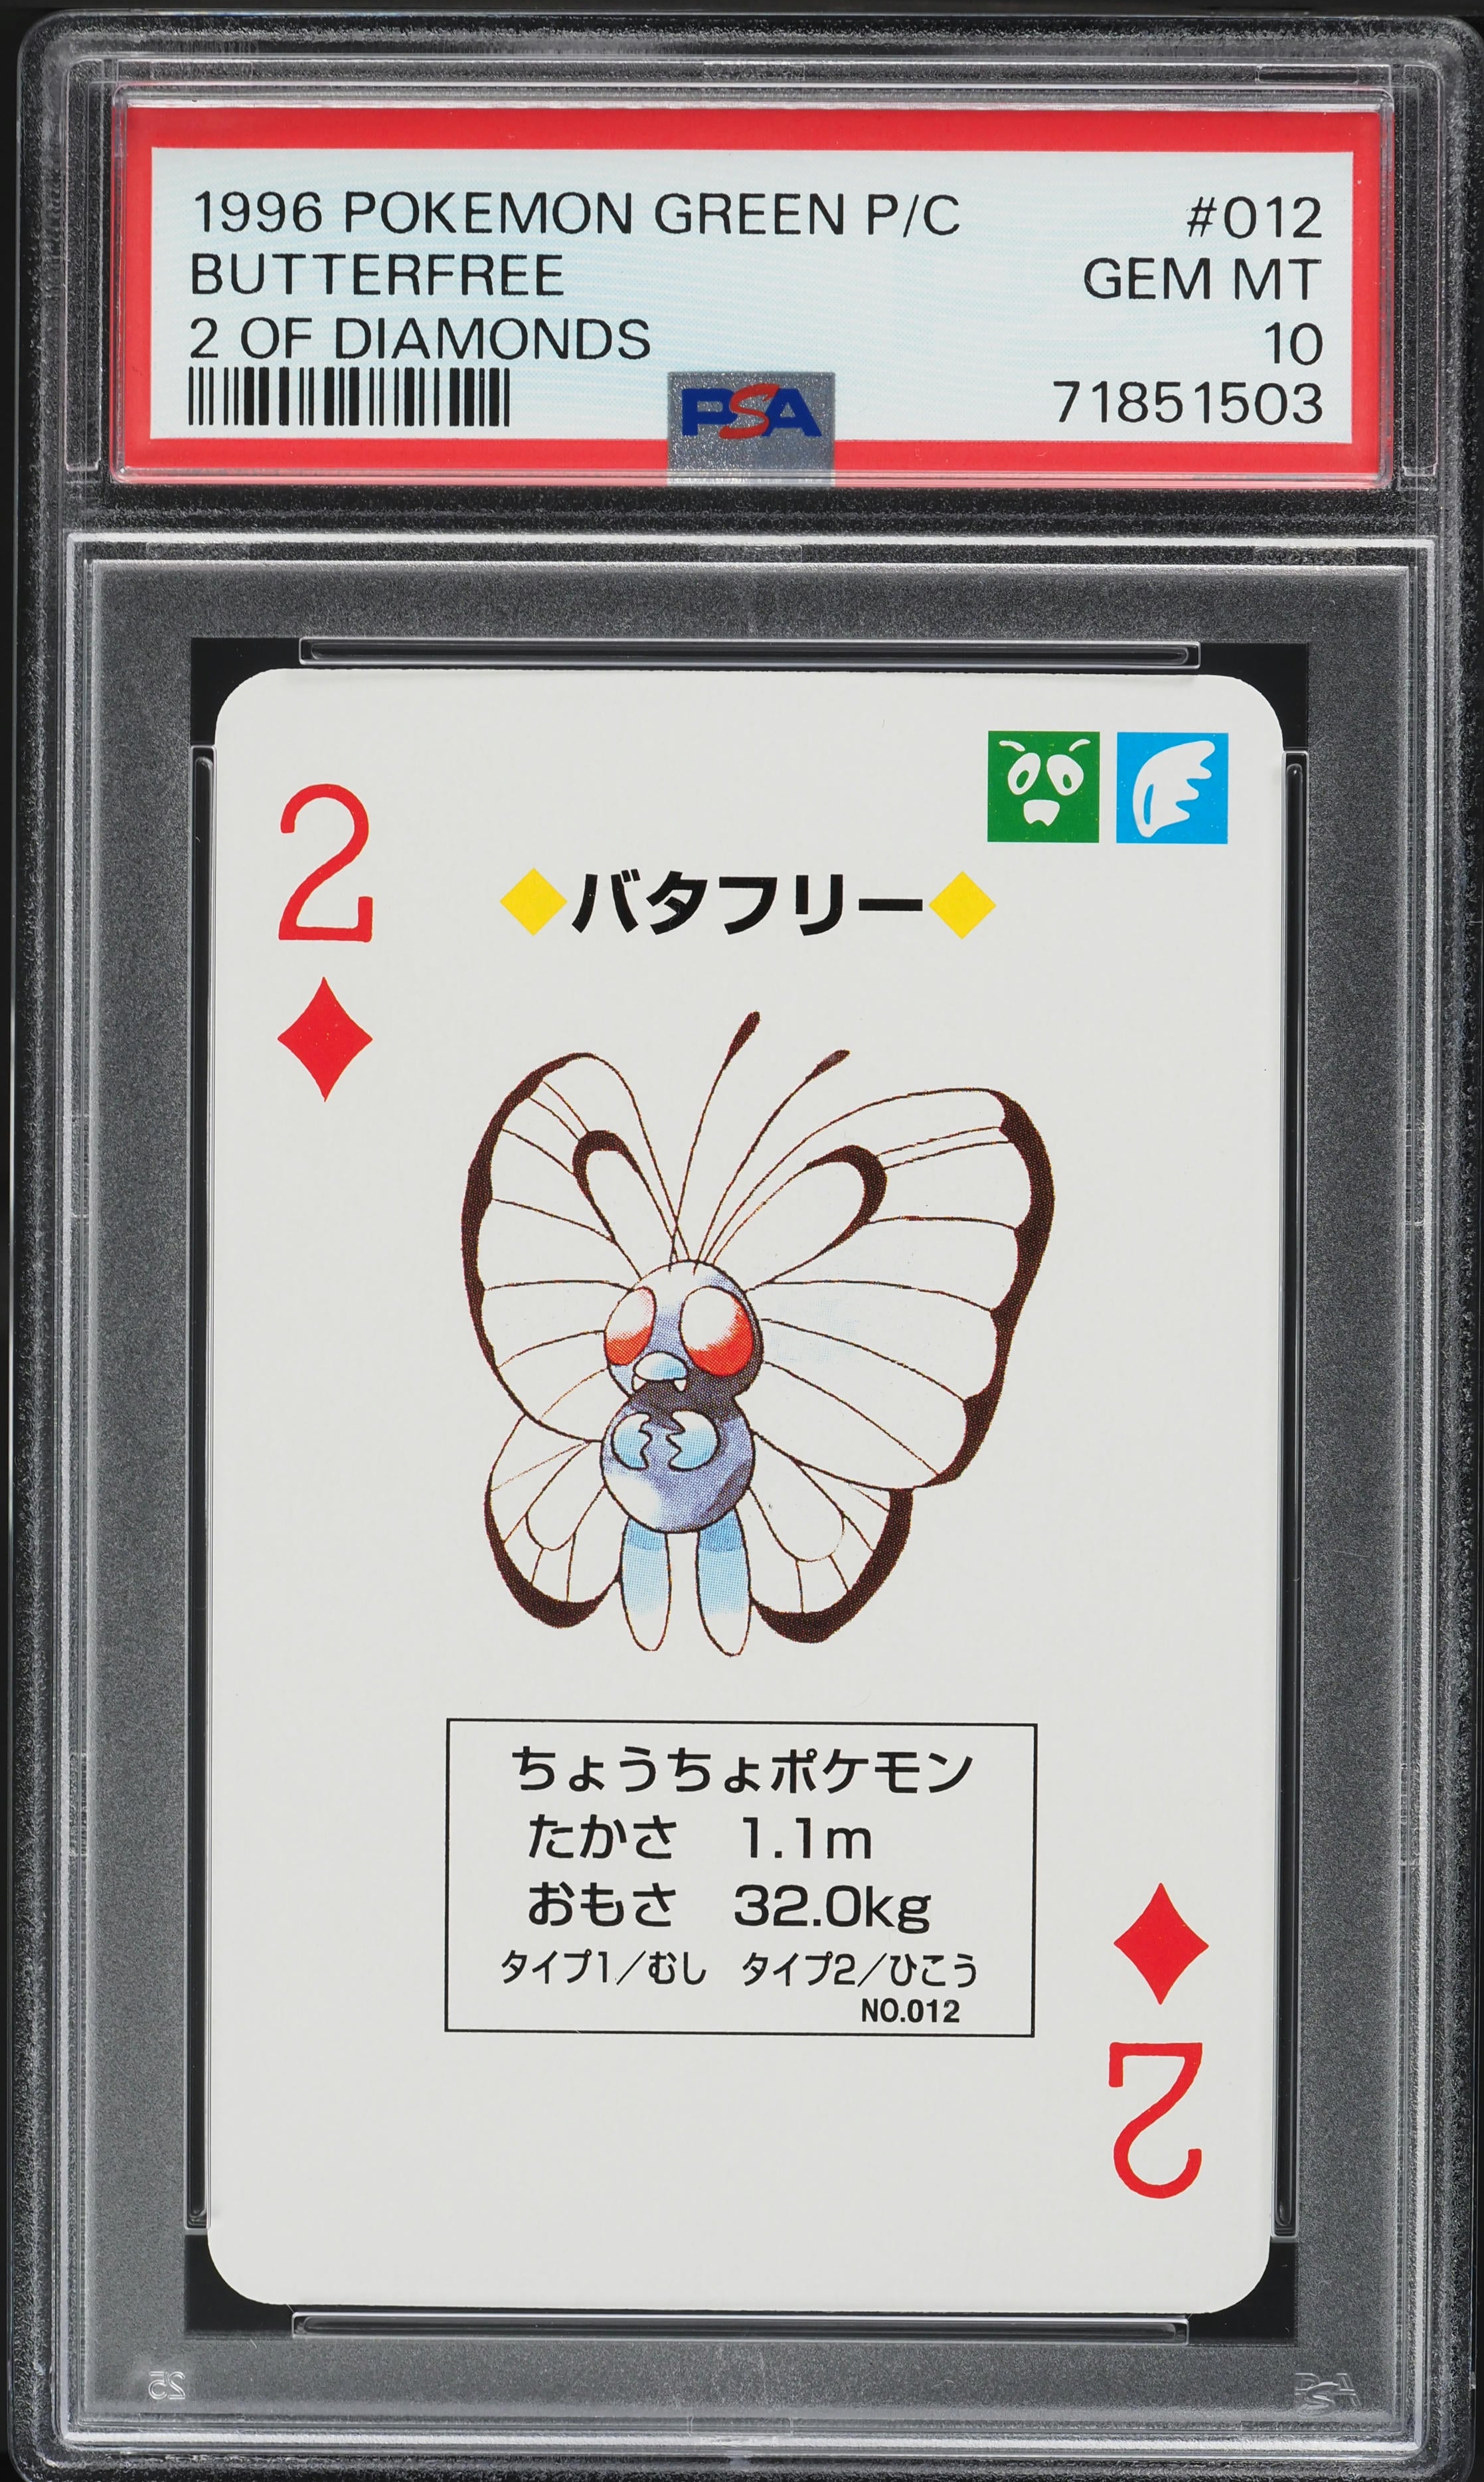 1996 Pokemon Green Version Playing Cards 2 Of Diamonds Butterfree #012 PSA 10